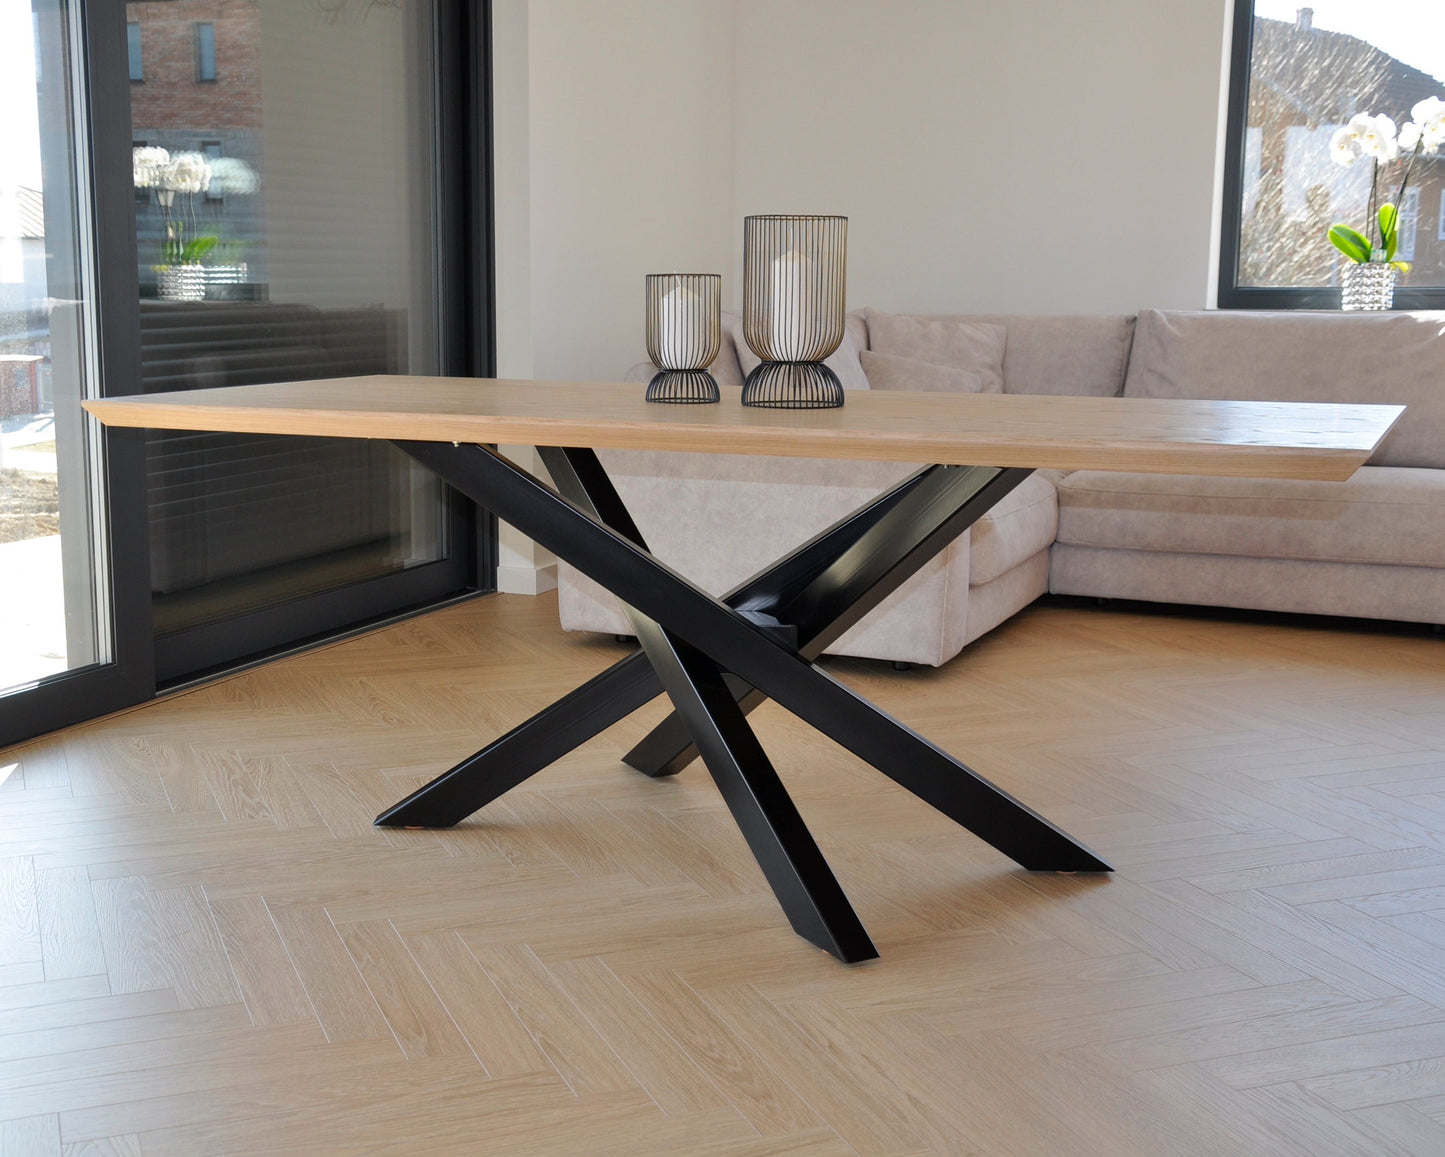 Pata de mesa cruzada de hierro para patas de mesa, soporte de mesa, soporte  de mesa de base cruzada, mesa de café, pata de pie, mesa de comedor, mesa